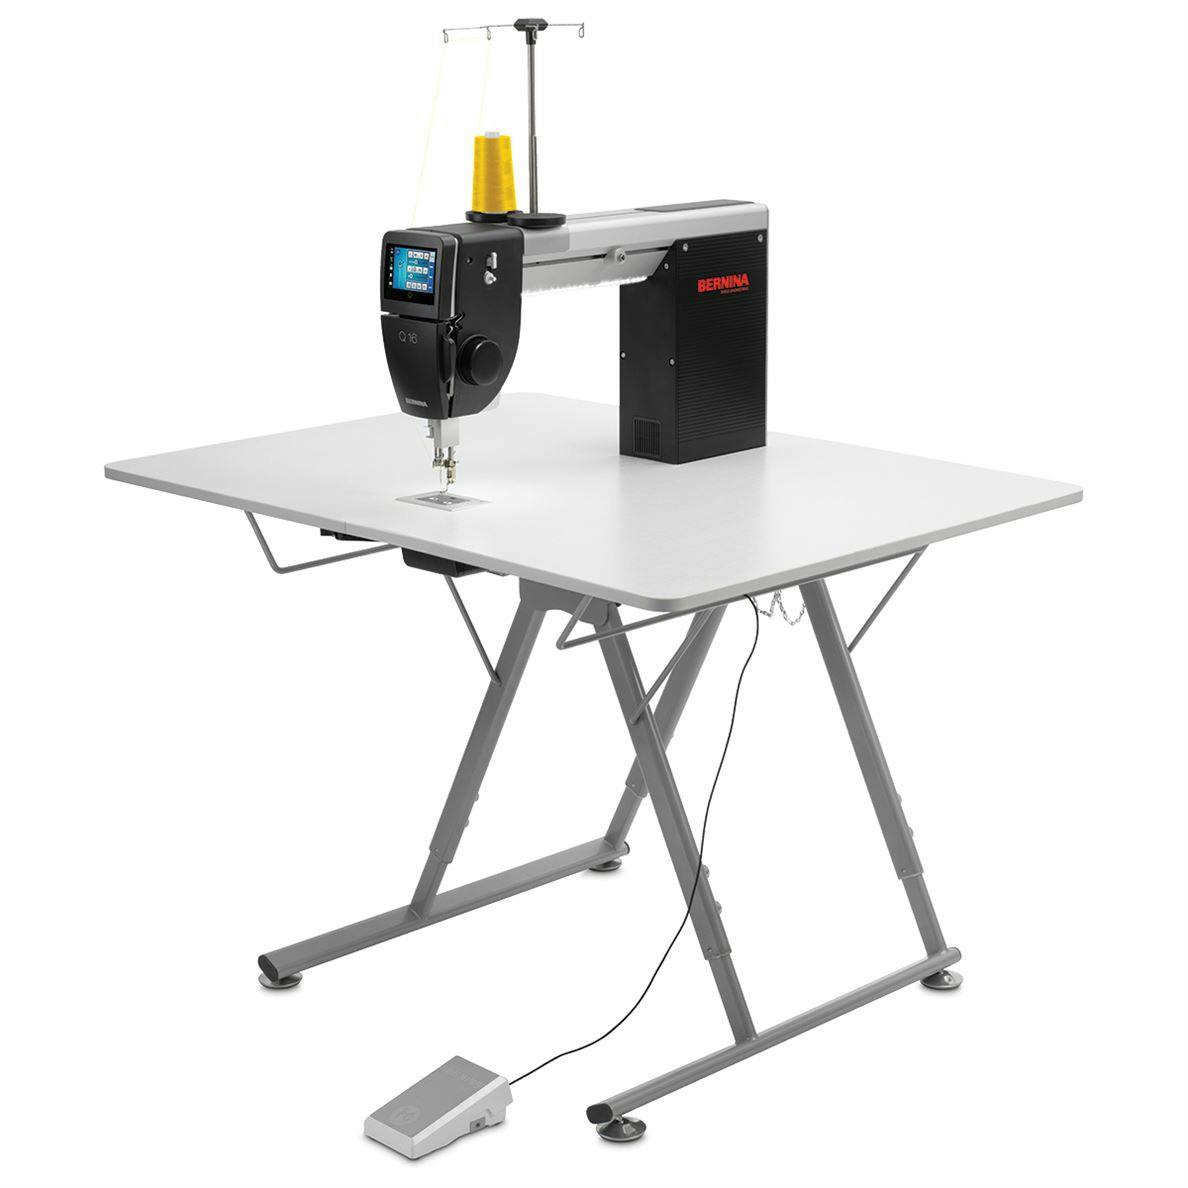 Bernina Q16 Longarm quilting machine with folding table